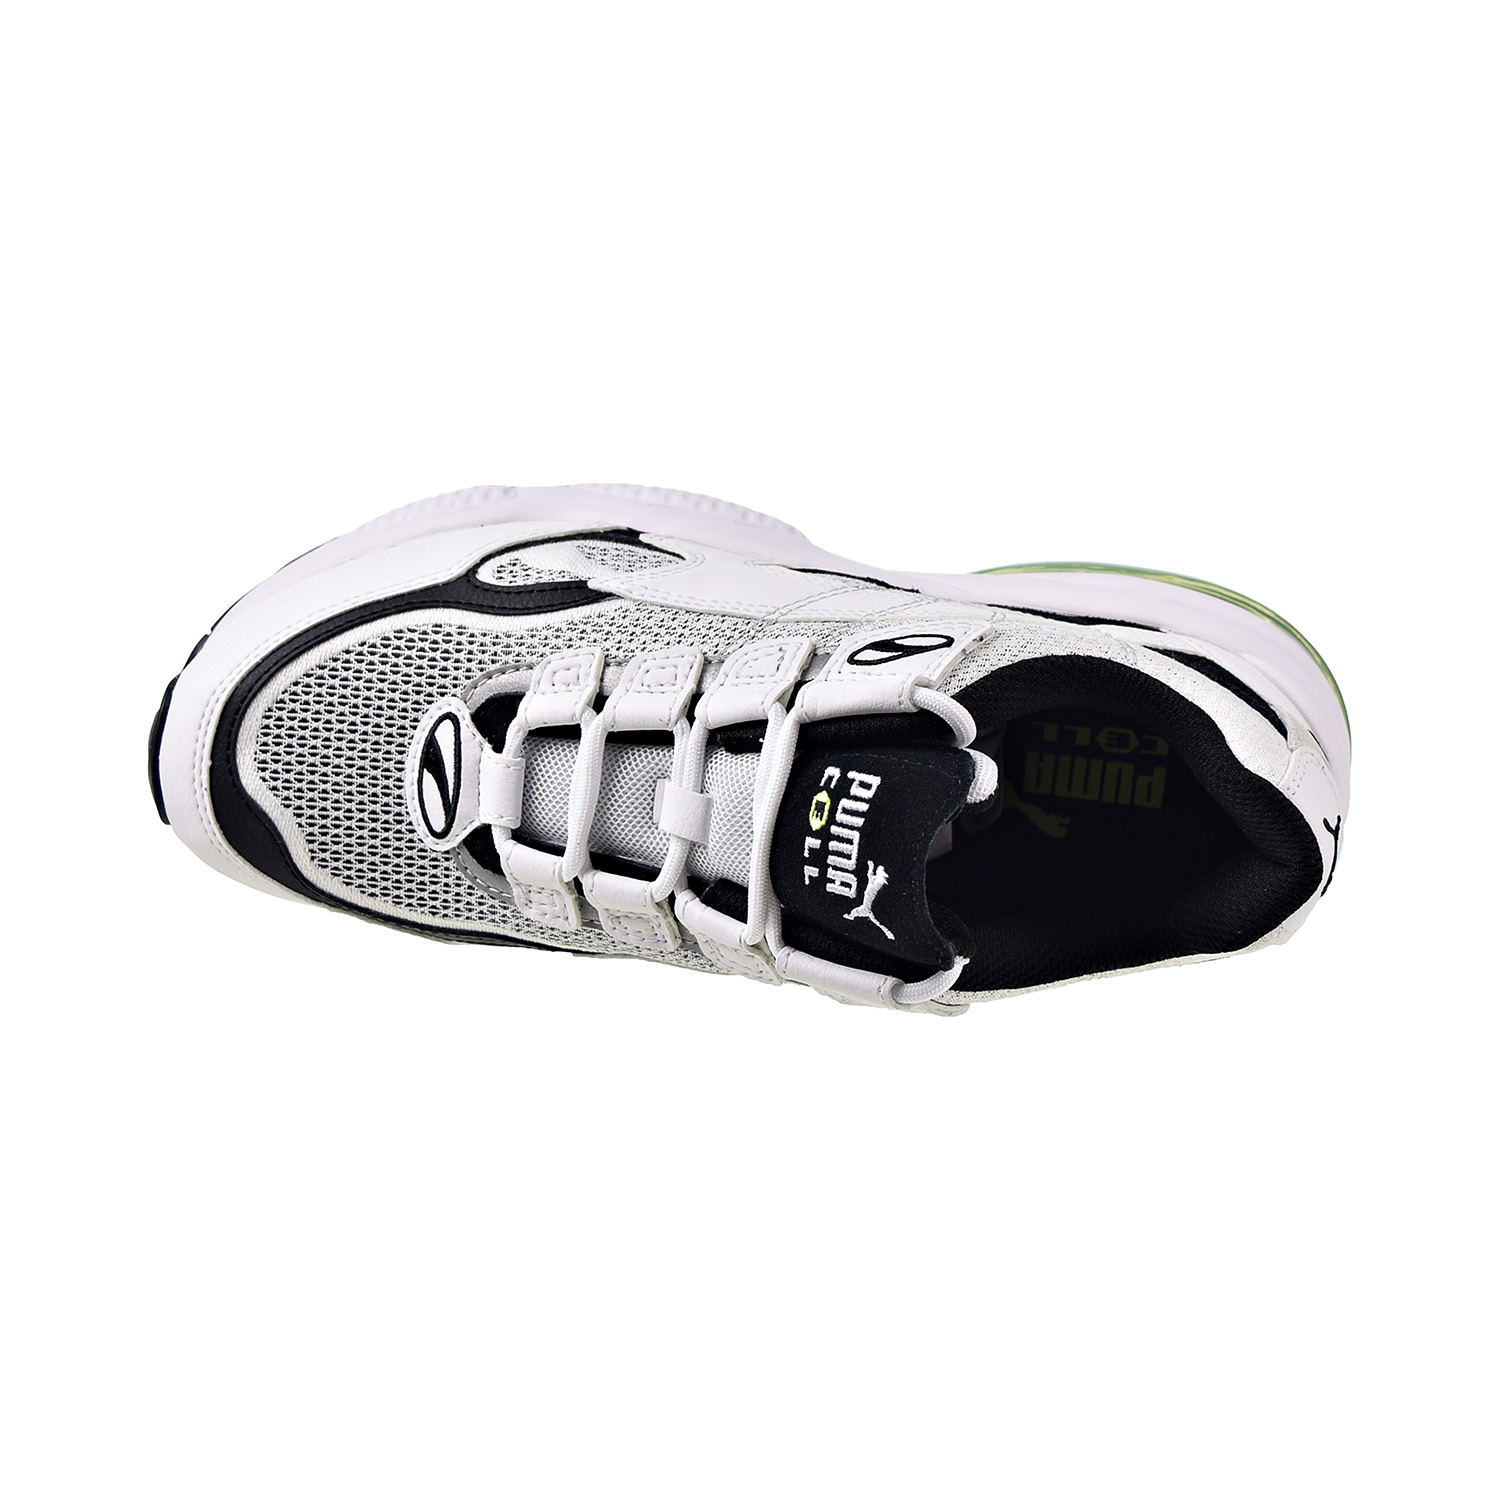 Puma Cell Venom Alert Men's Shoes White-Black 369810-03 - image 5 of 6